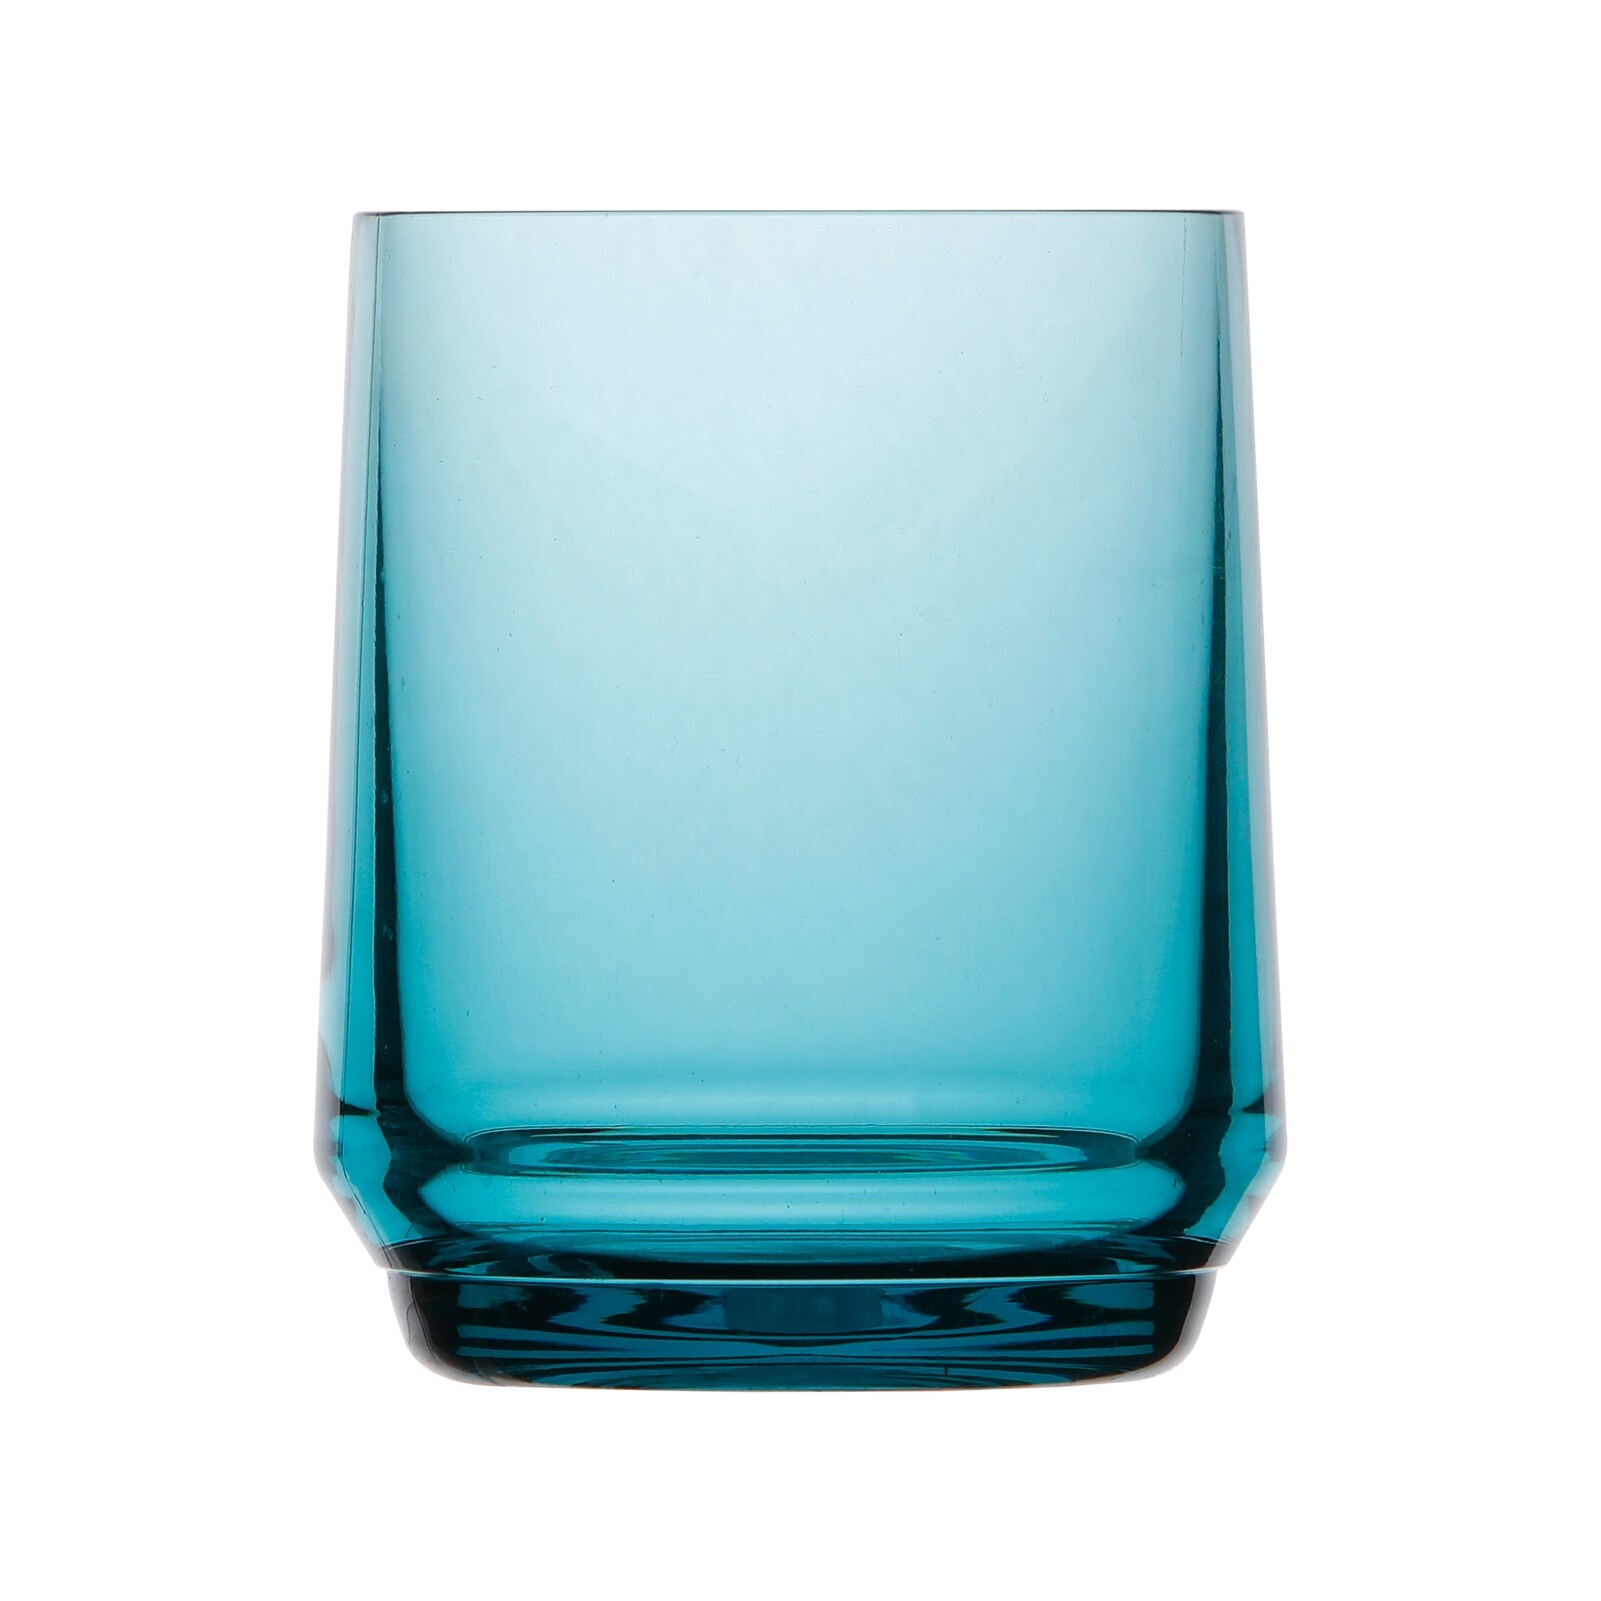 https://ak1.ostkcdn.com/images/products/is/images/direct/23d28006e9bd45194600de7c13c9edf4ed35f701/Bahamas-Break-Resistant-Water-Glass.jpg